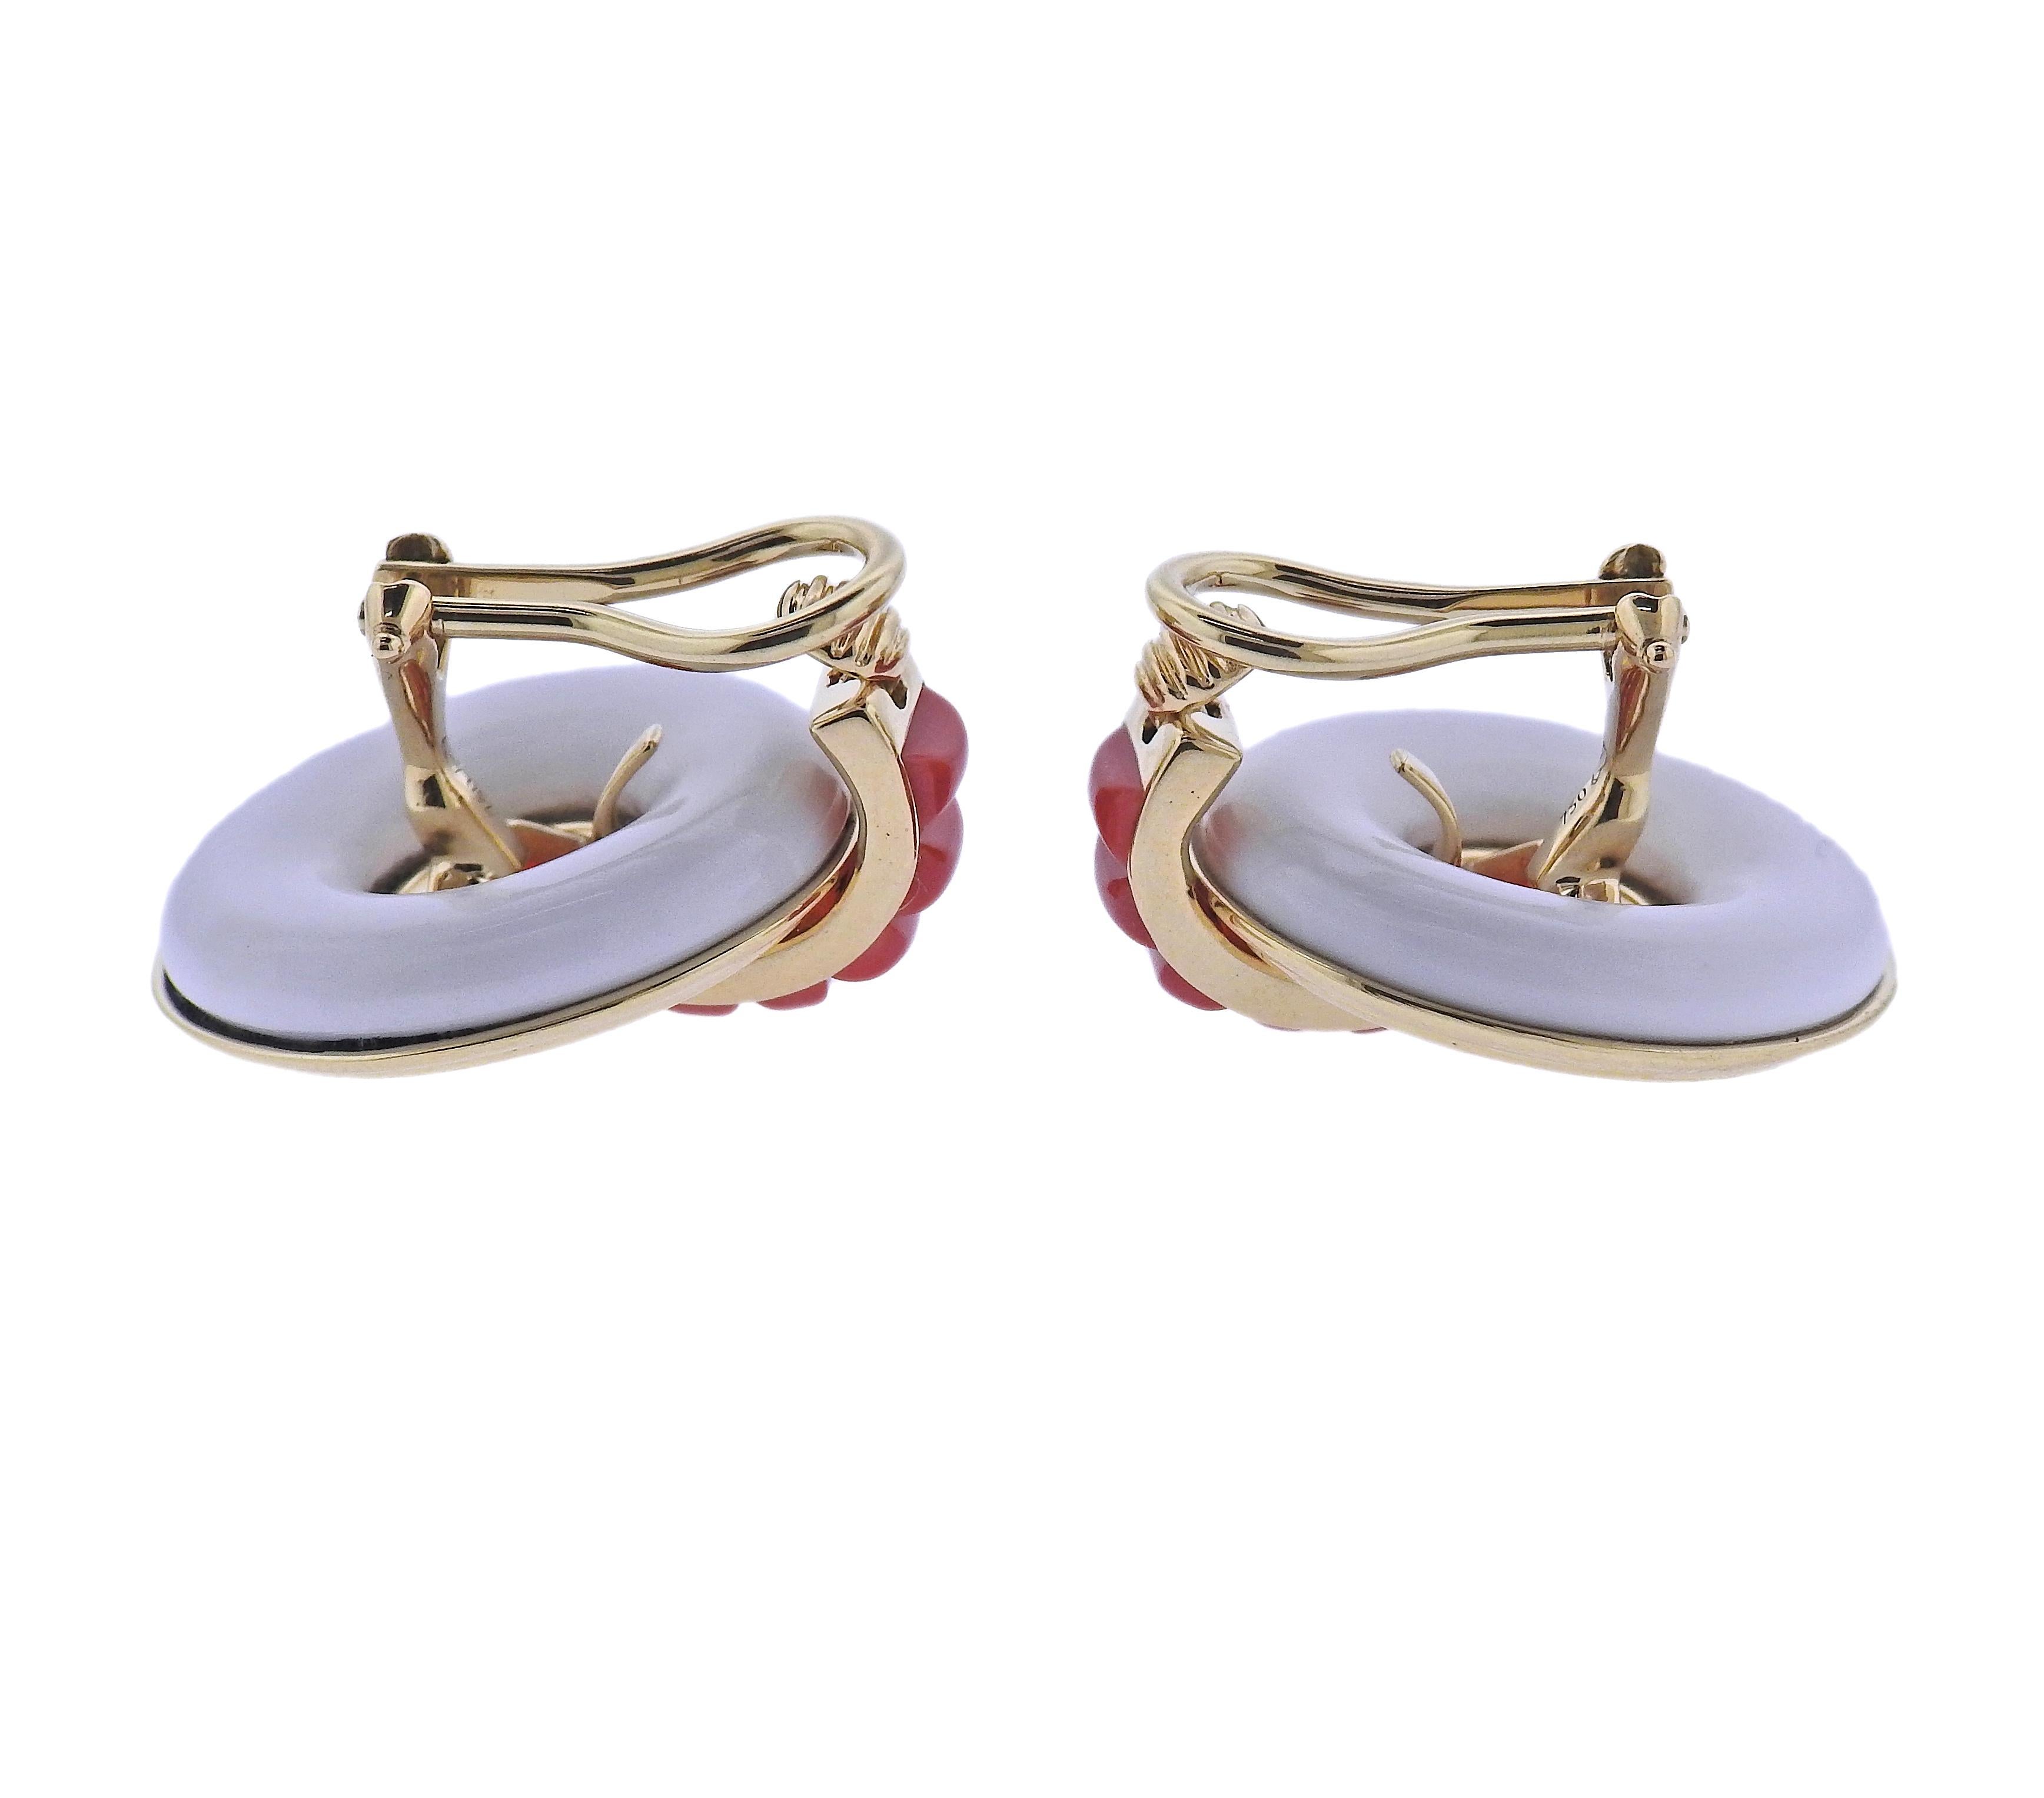 Sugarloaf Cabochon Seaman Schepps Giro Reversible Ceramic Coral Gold Doorknocker Earrings For Sale